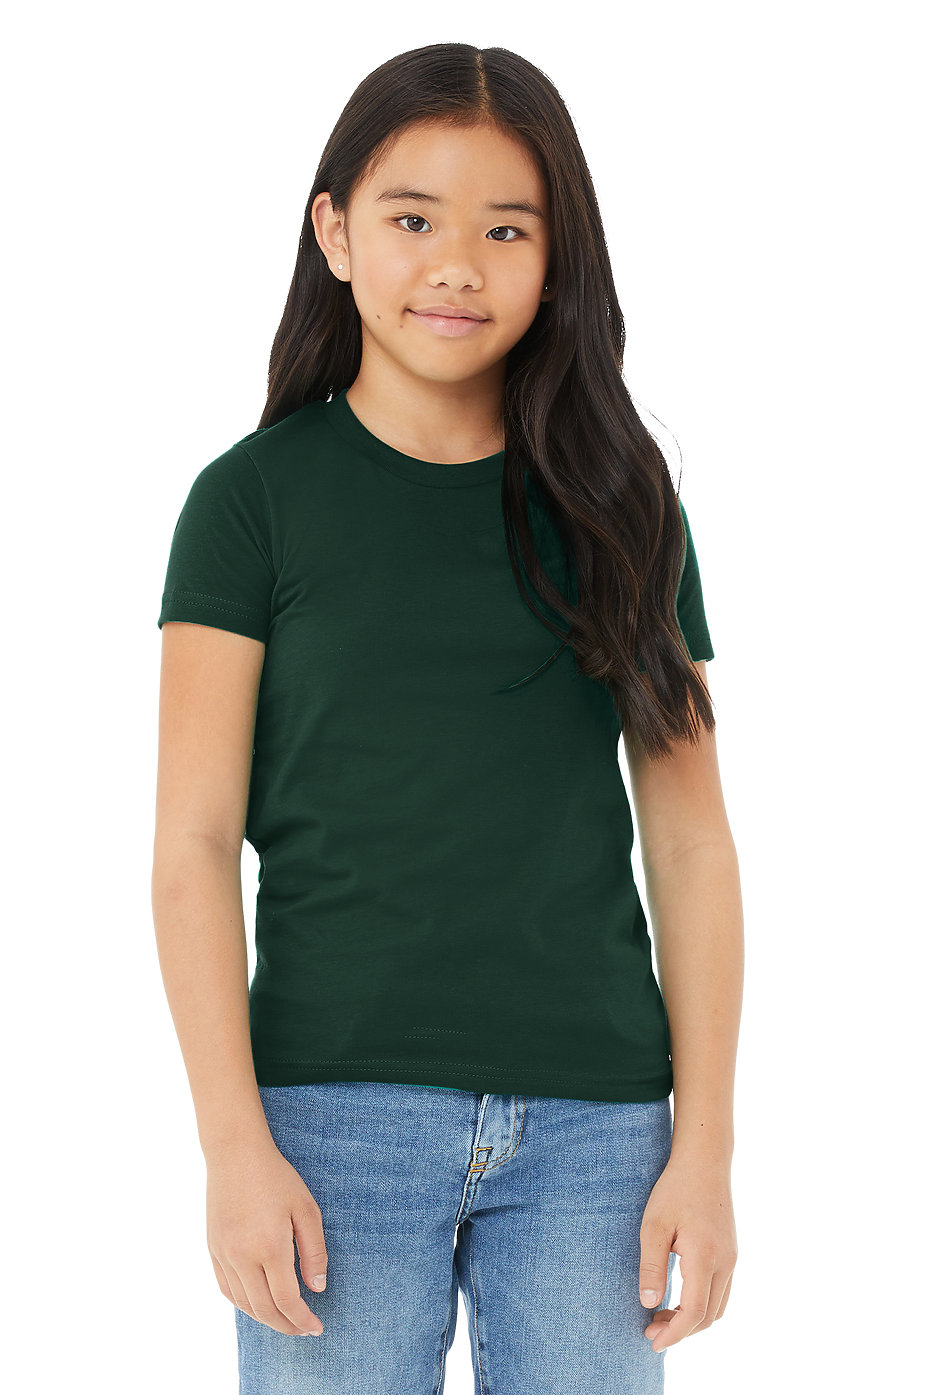 guidance Full Chapel Wholesale Kids Clothing | Plain Blank Kids T Shirts | Kids Tee Shirts |  BELLA+CANVAS ®